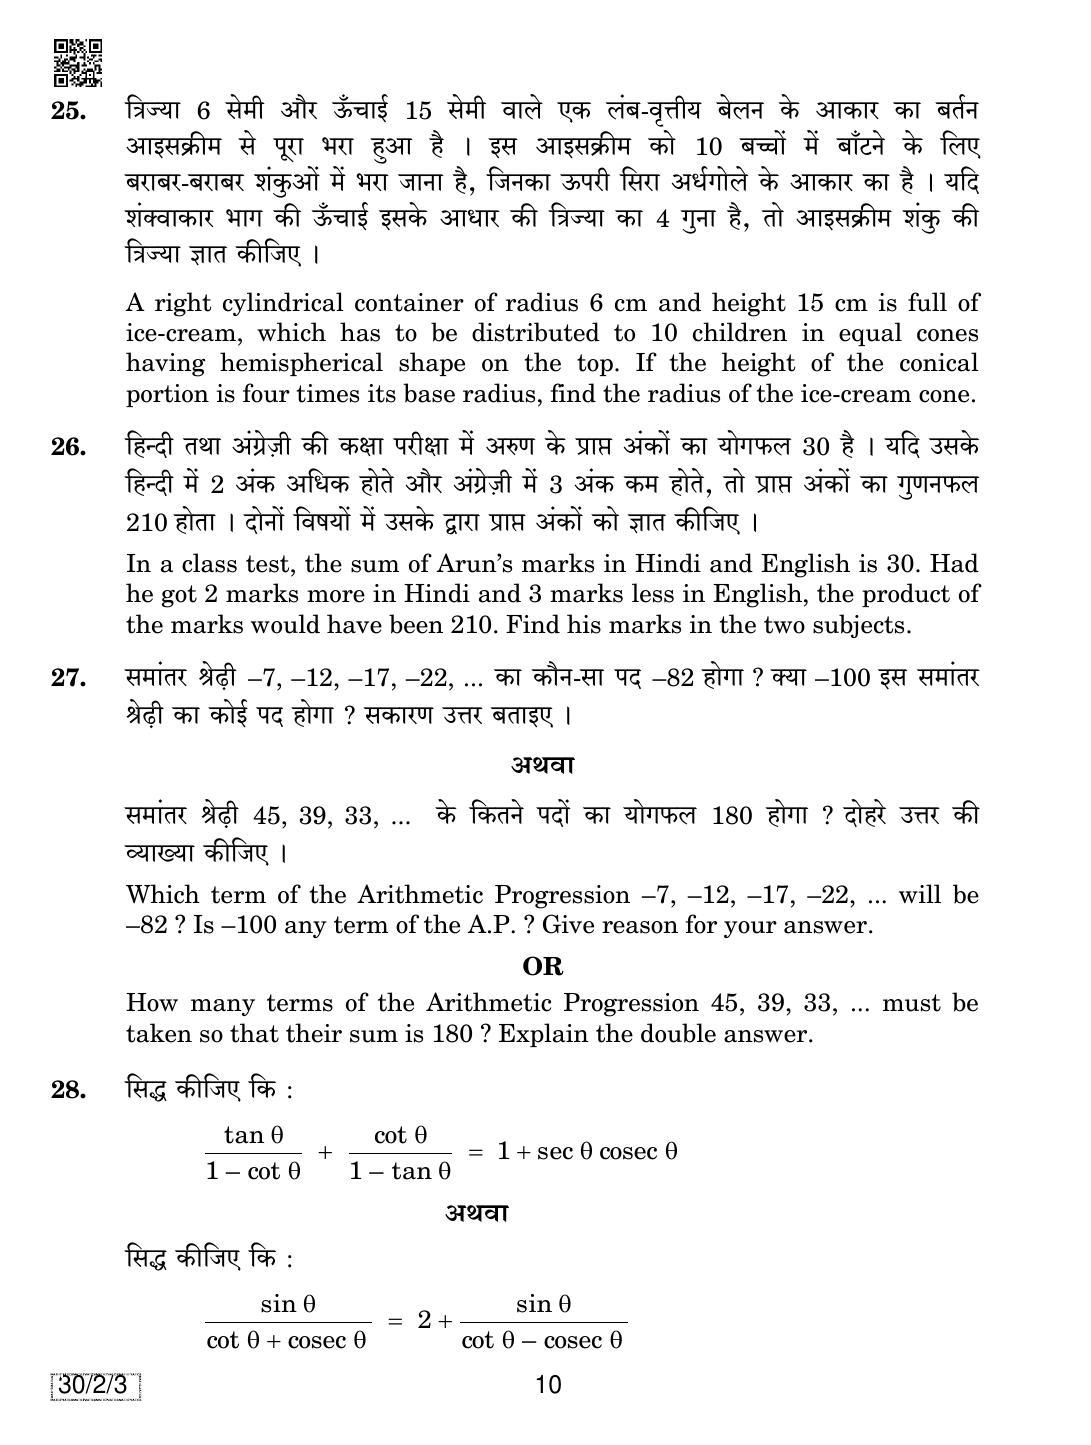 CBSE Class 10 Maths (30/2/3 - SET 3) 2019 Question Paper - Page 10